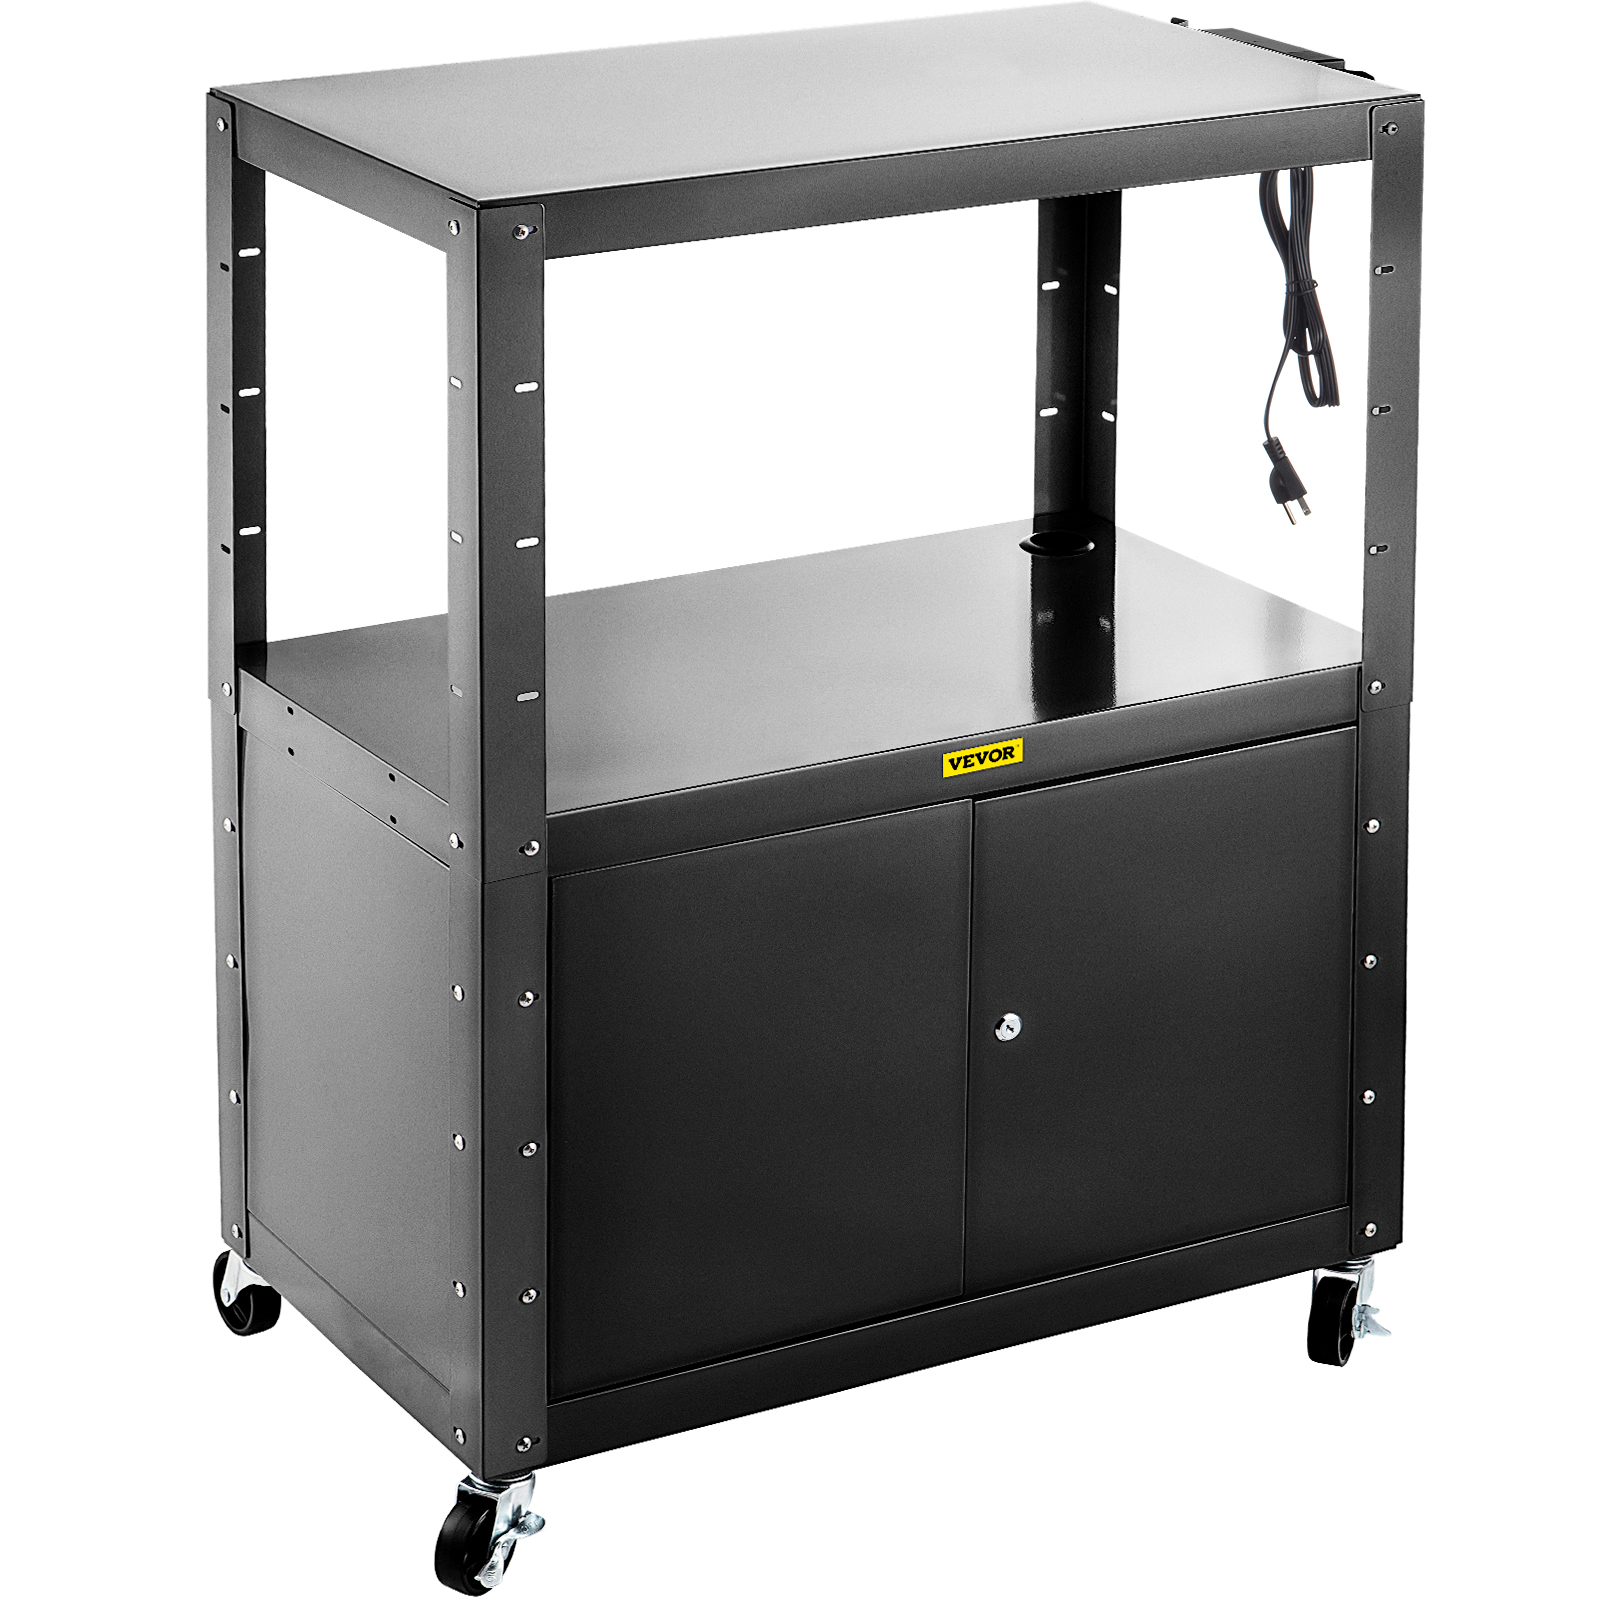 Vevor Steel Av Cart Media Cart With Locking Cabinet 32-42 Inchheight Adjustable от Vevor Many GEOs